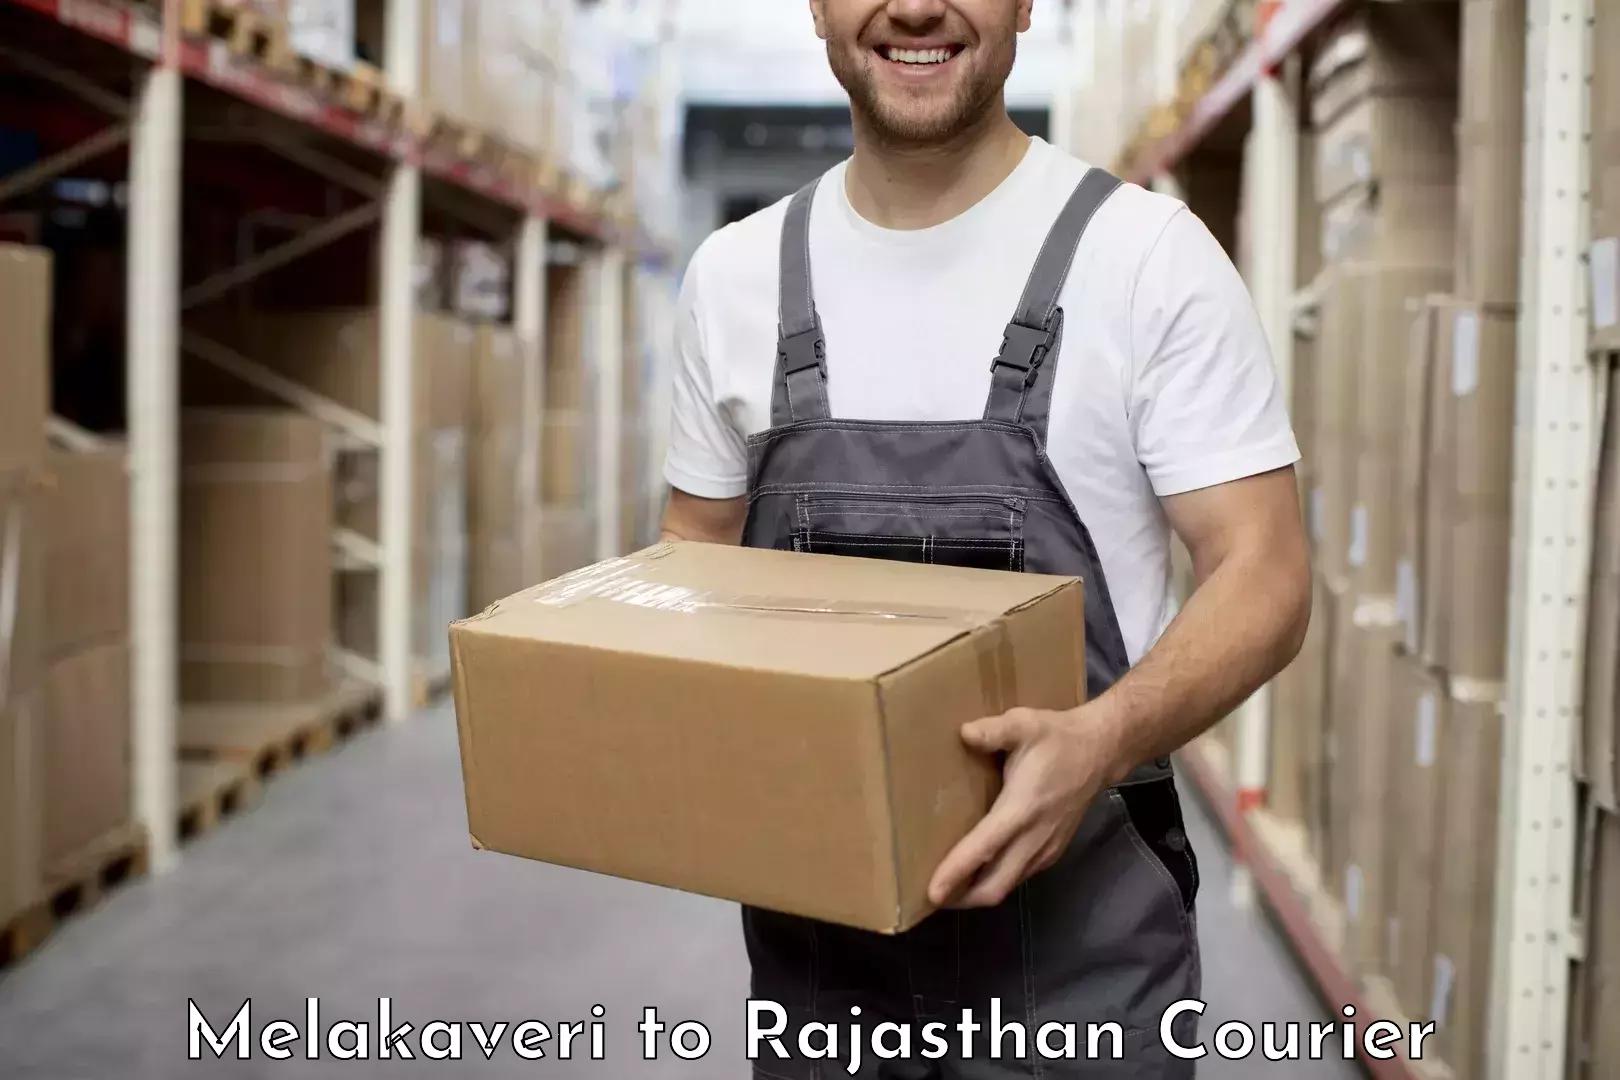 Automated parcel services Melakaveri to Bikaner